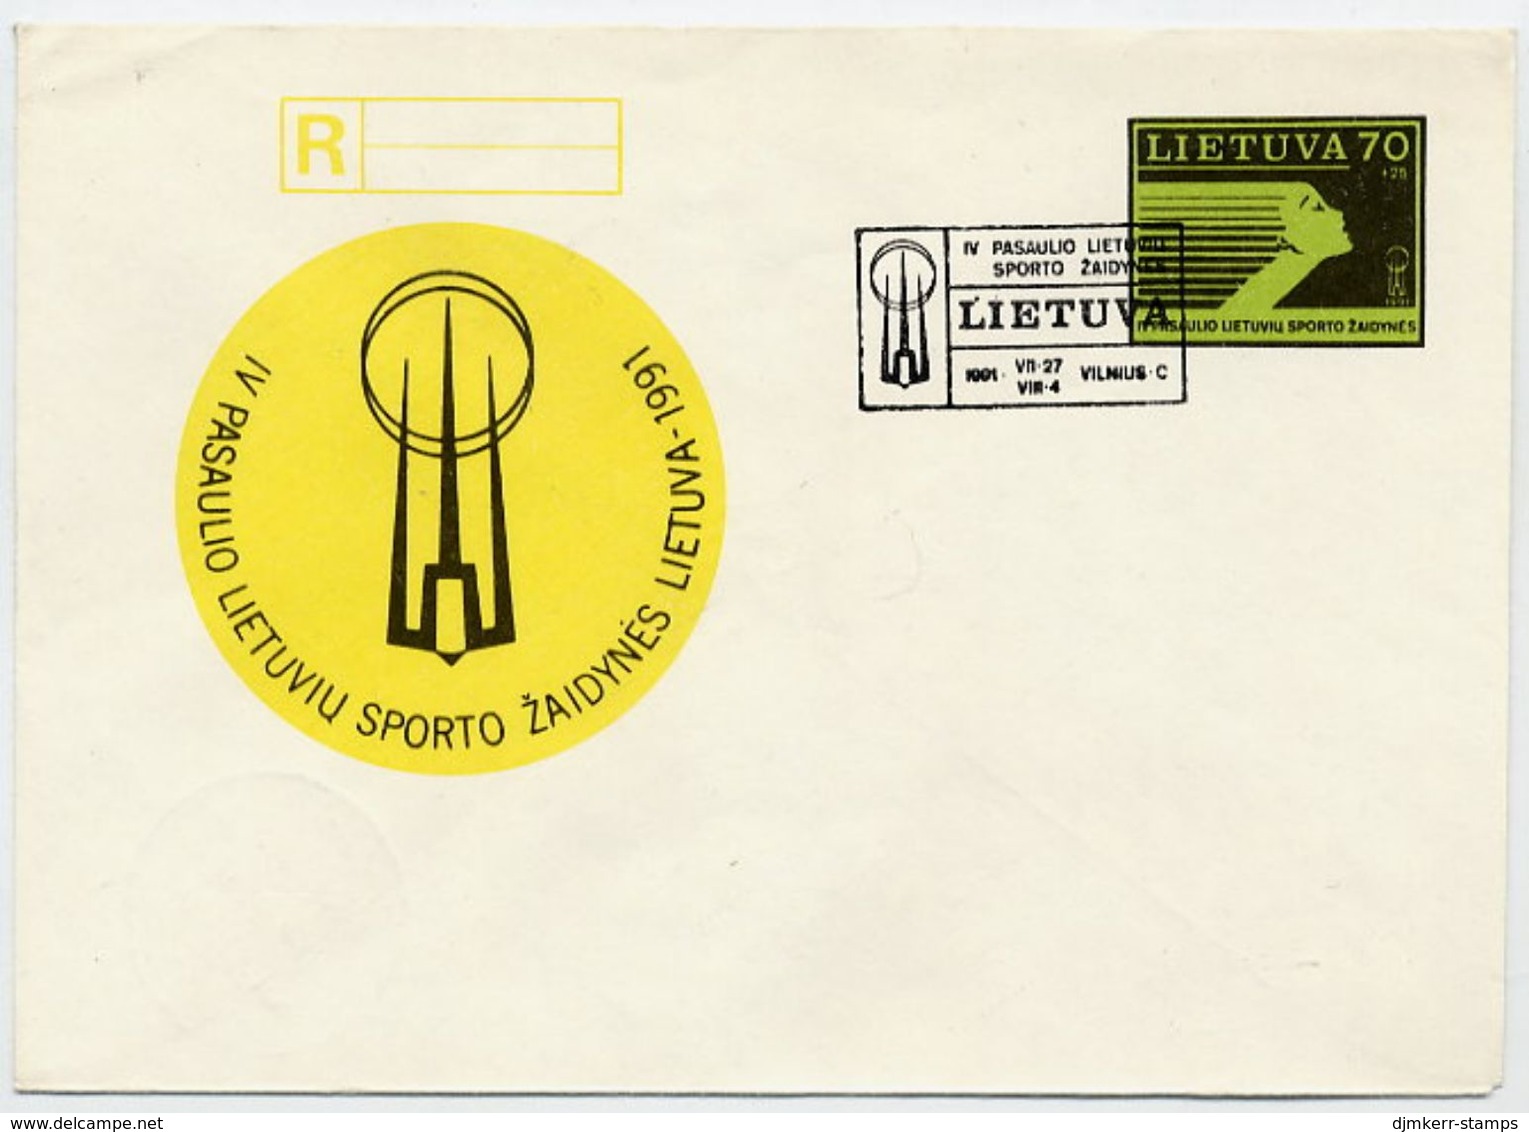 LITHUANIA 1991 Lithuanian World Games Registration Stationery Envelope, Cancelled.  Michel EU2 - Litouwen